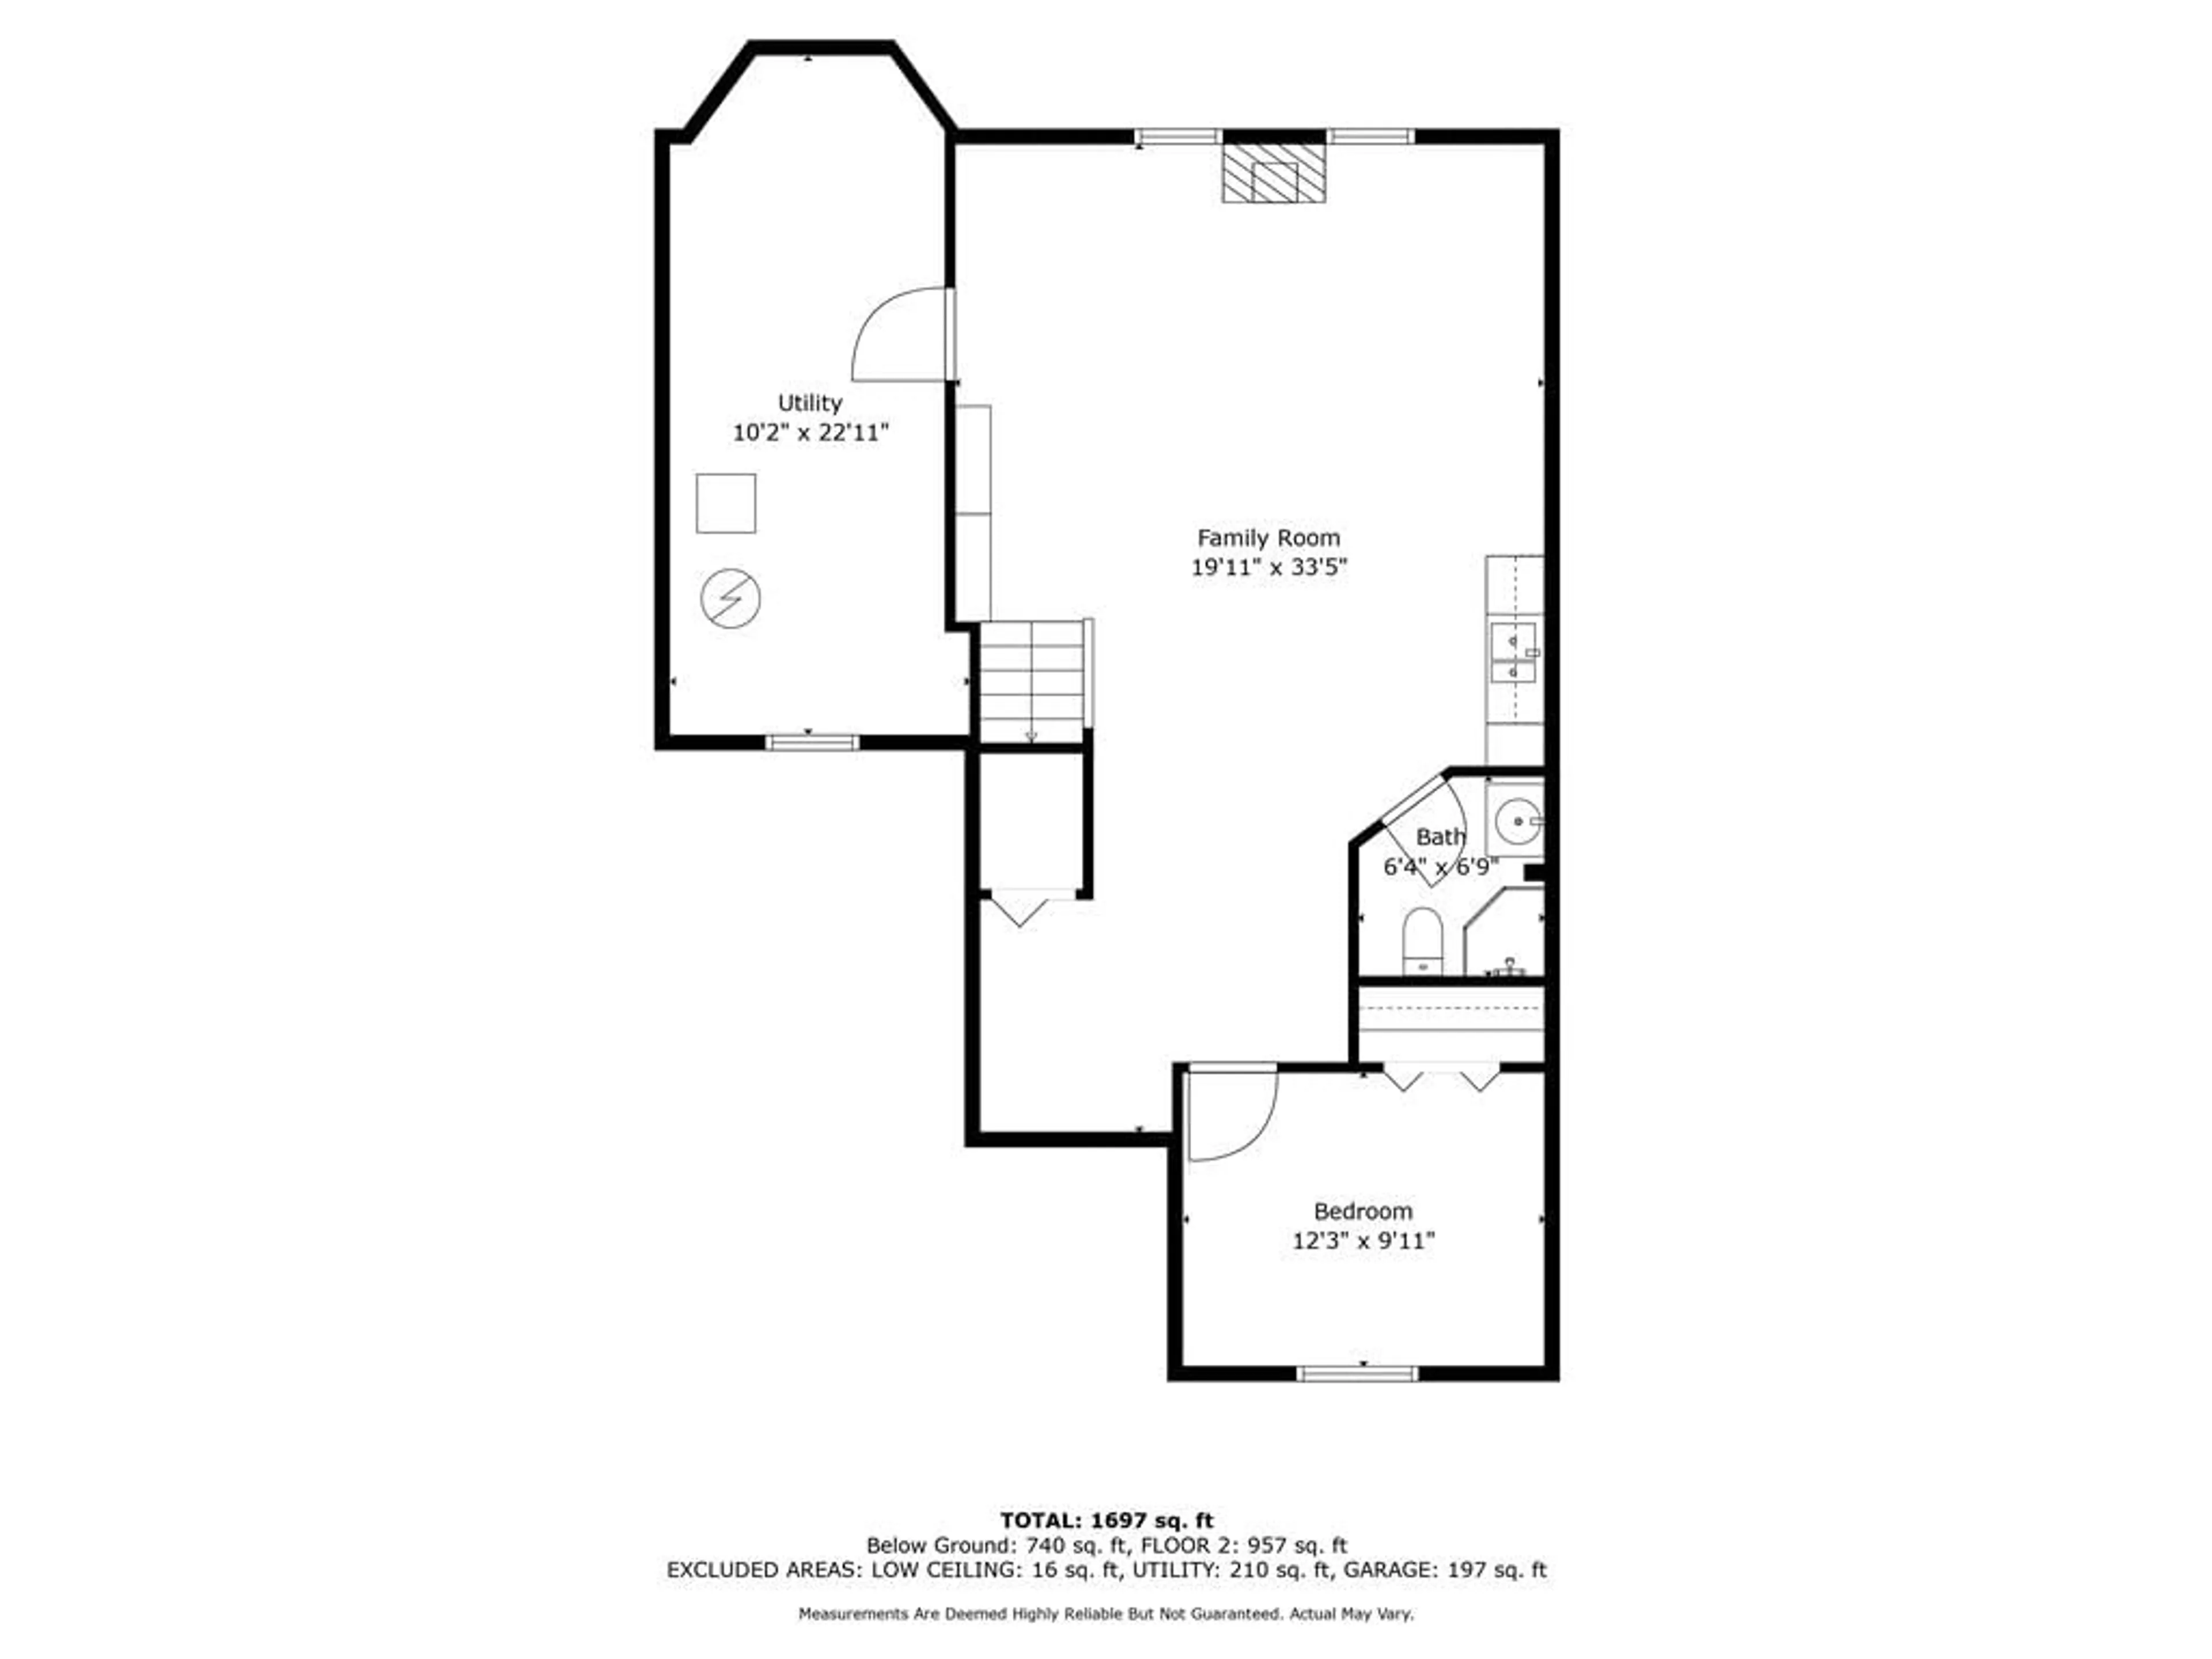 Floor plan for 92 Sunibel Dr, Mount Hope Ontario L0R 1W0